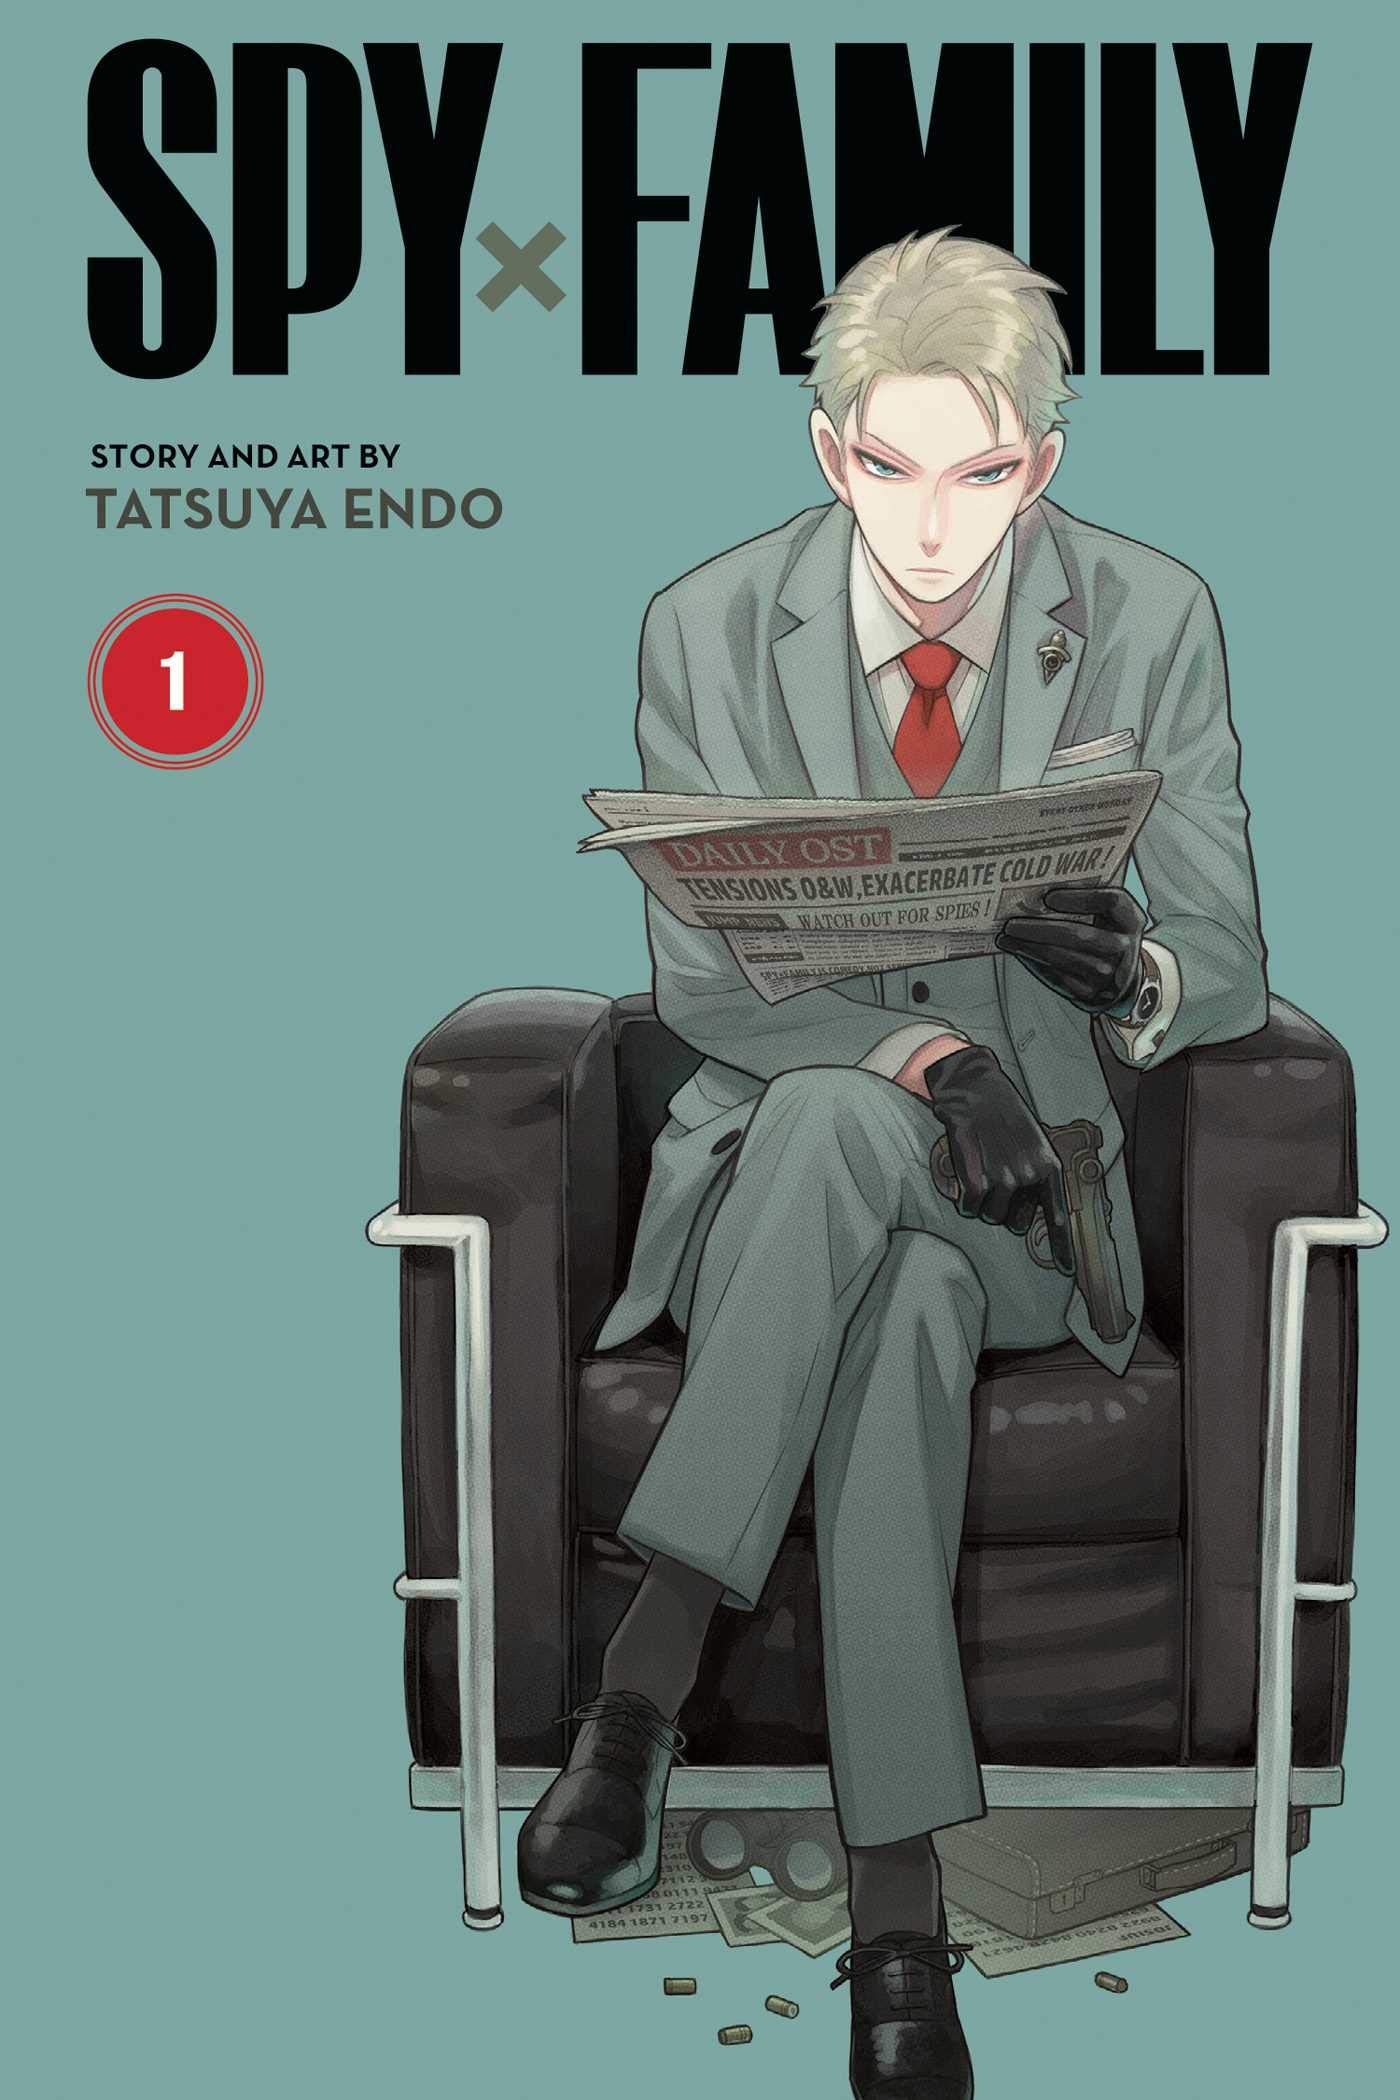 Is Spy x Family manga Worth Reading?